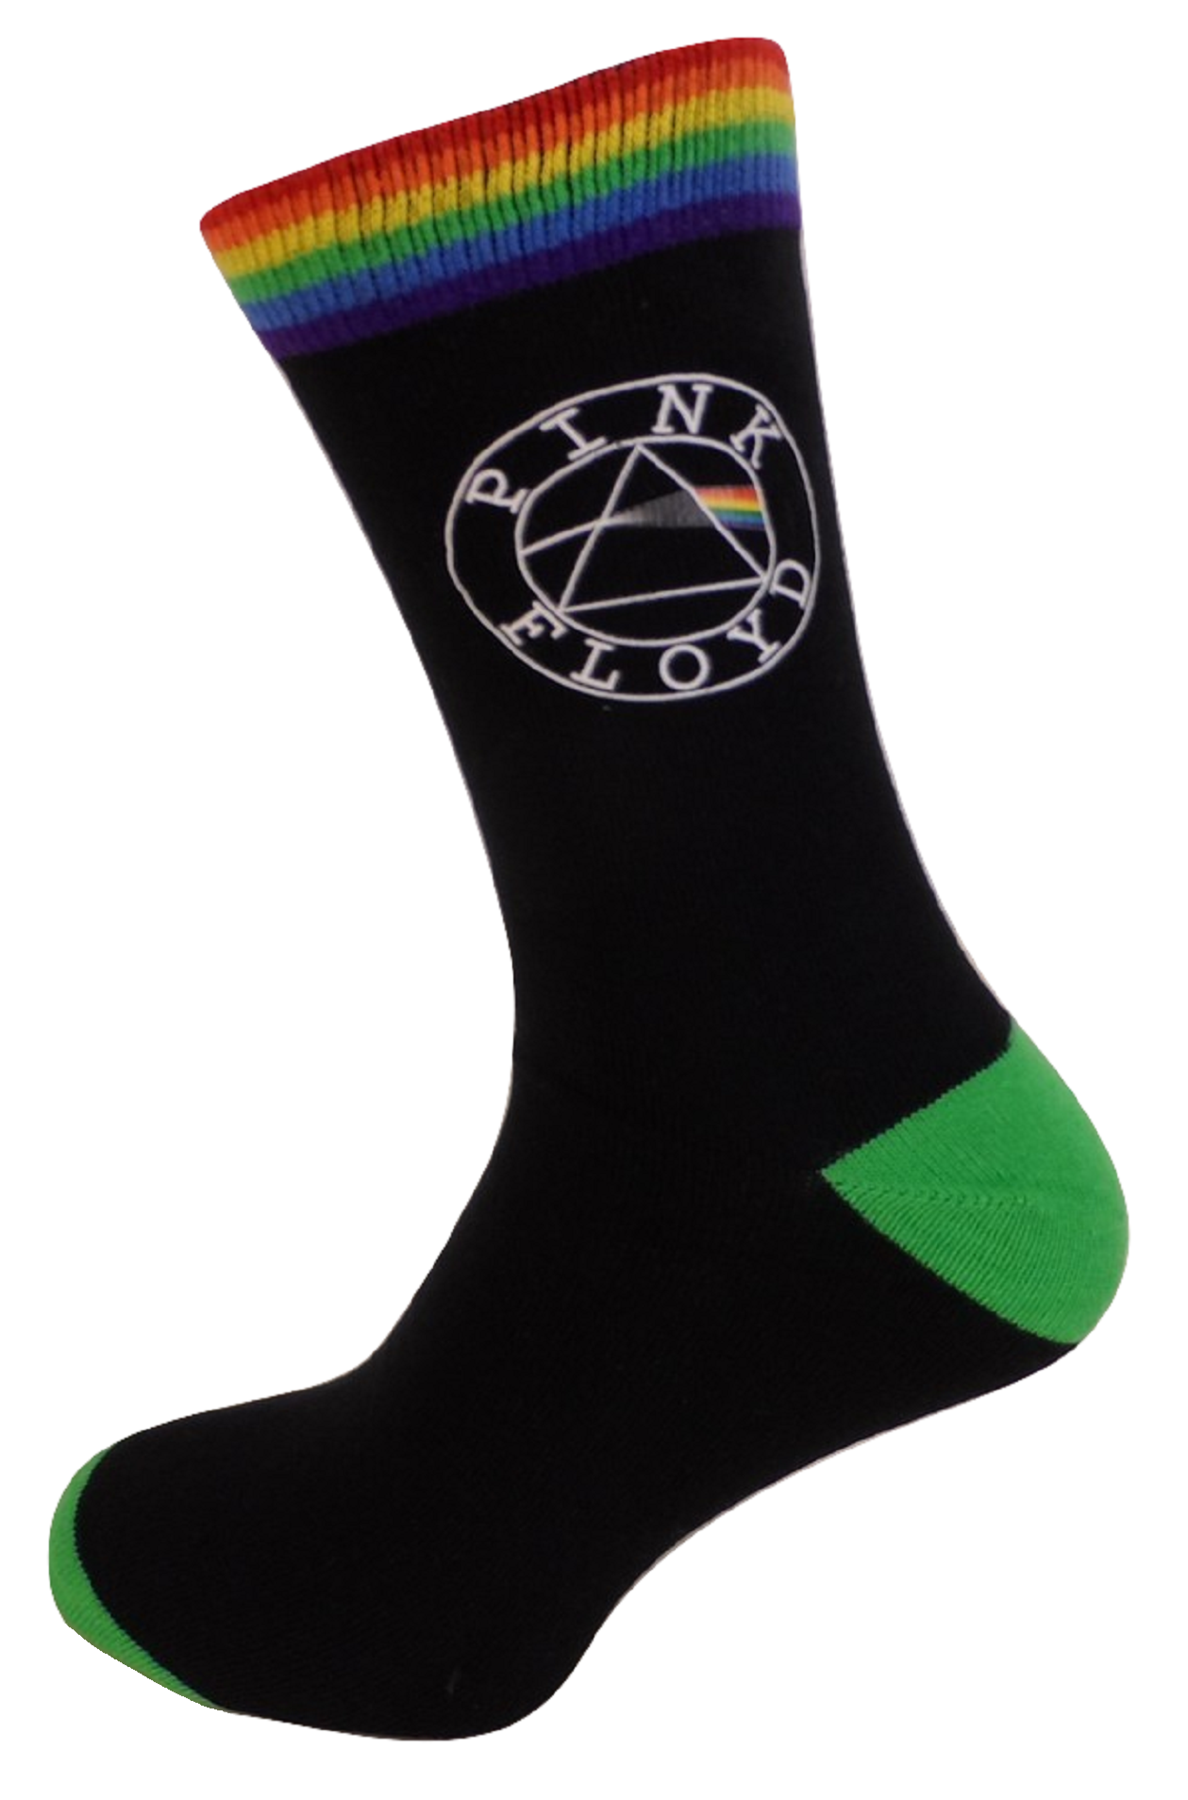 Officially Licensed Pink Floyd Dark Side of the Moon Socks für Herren